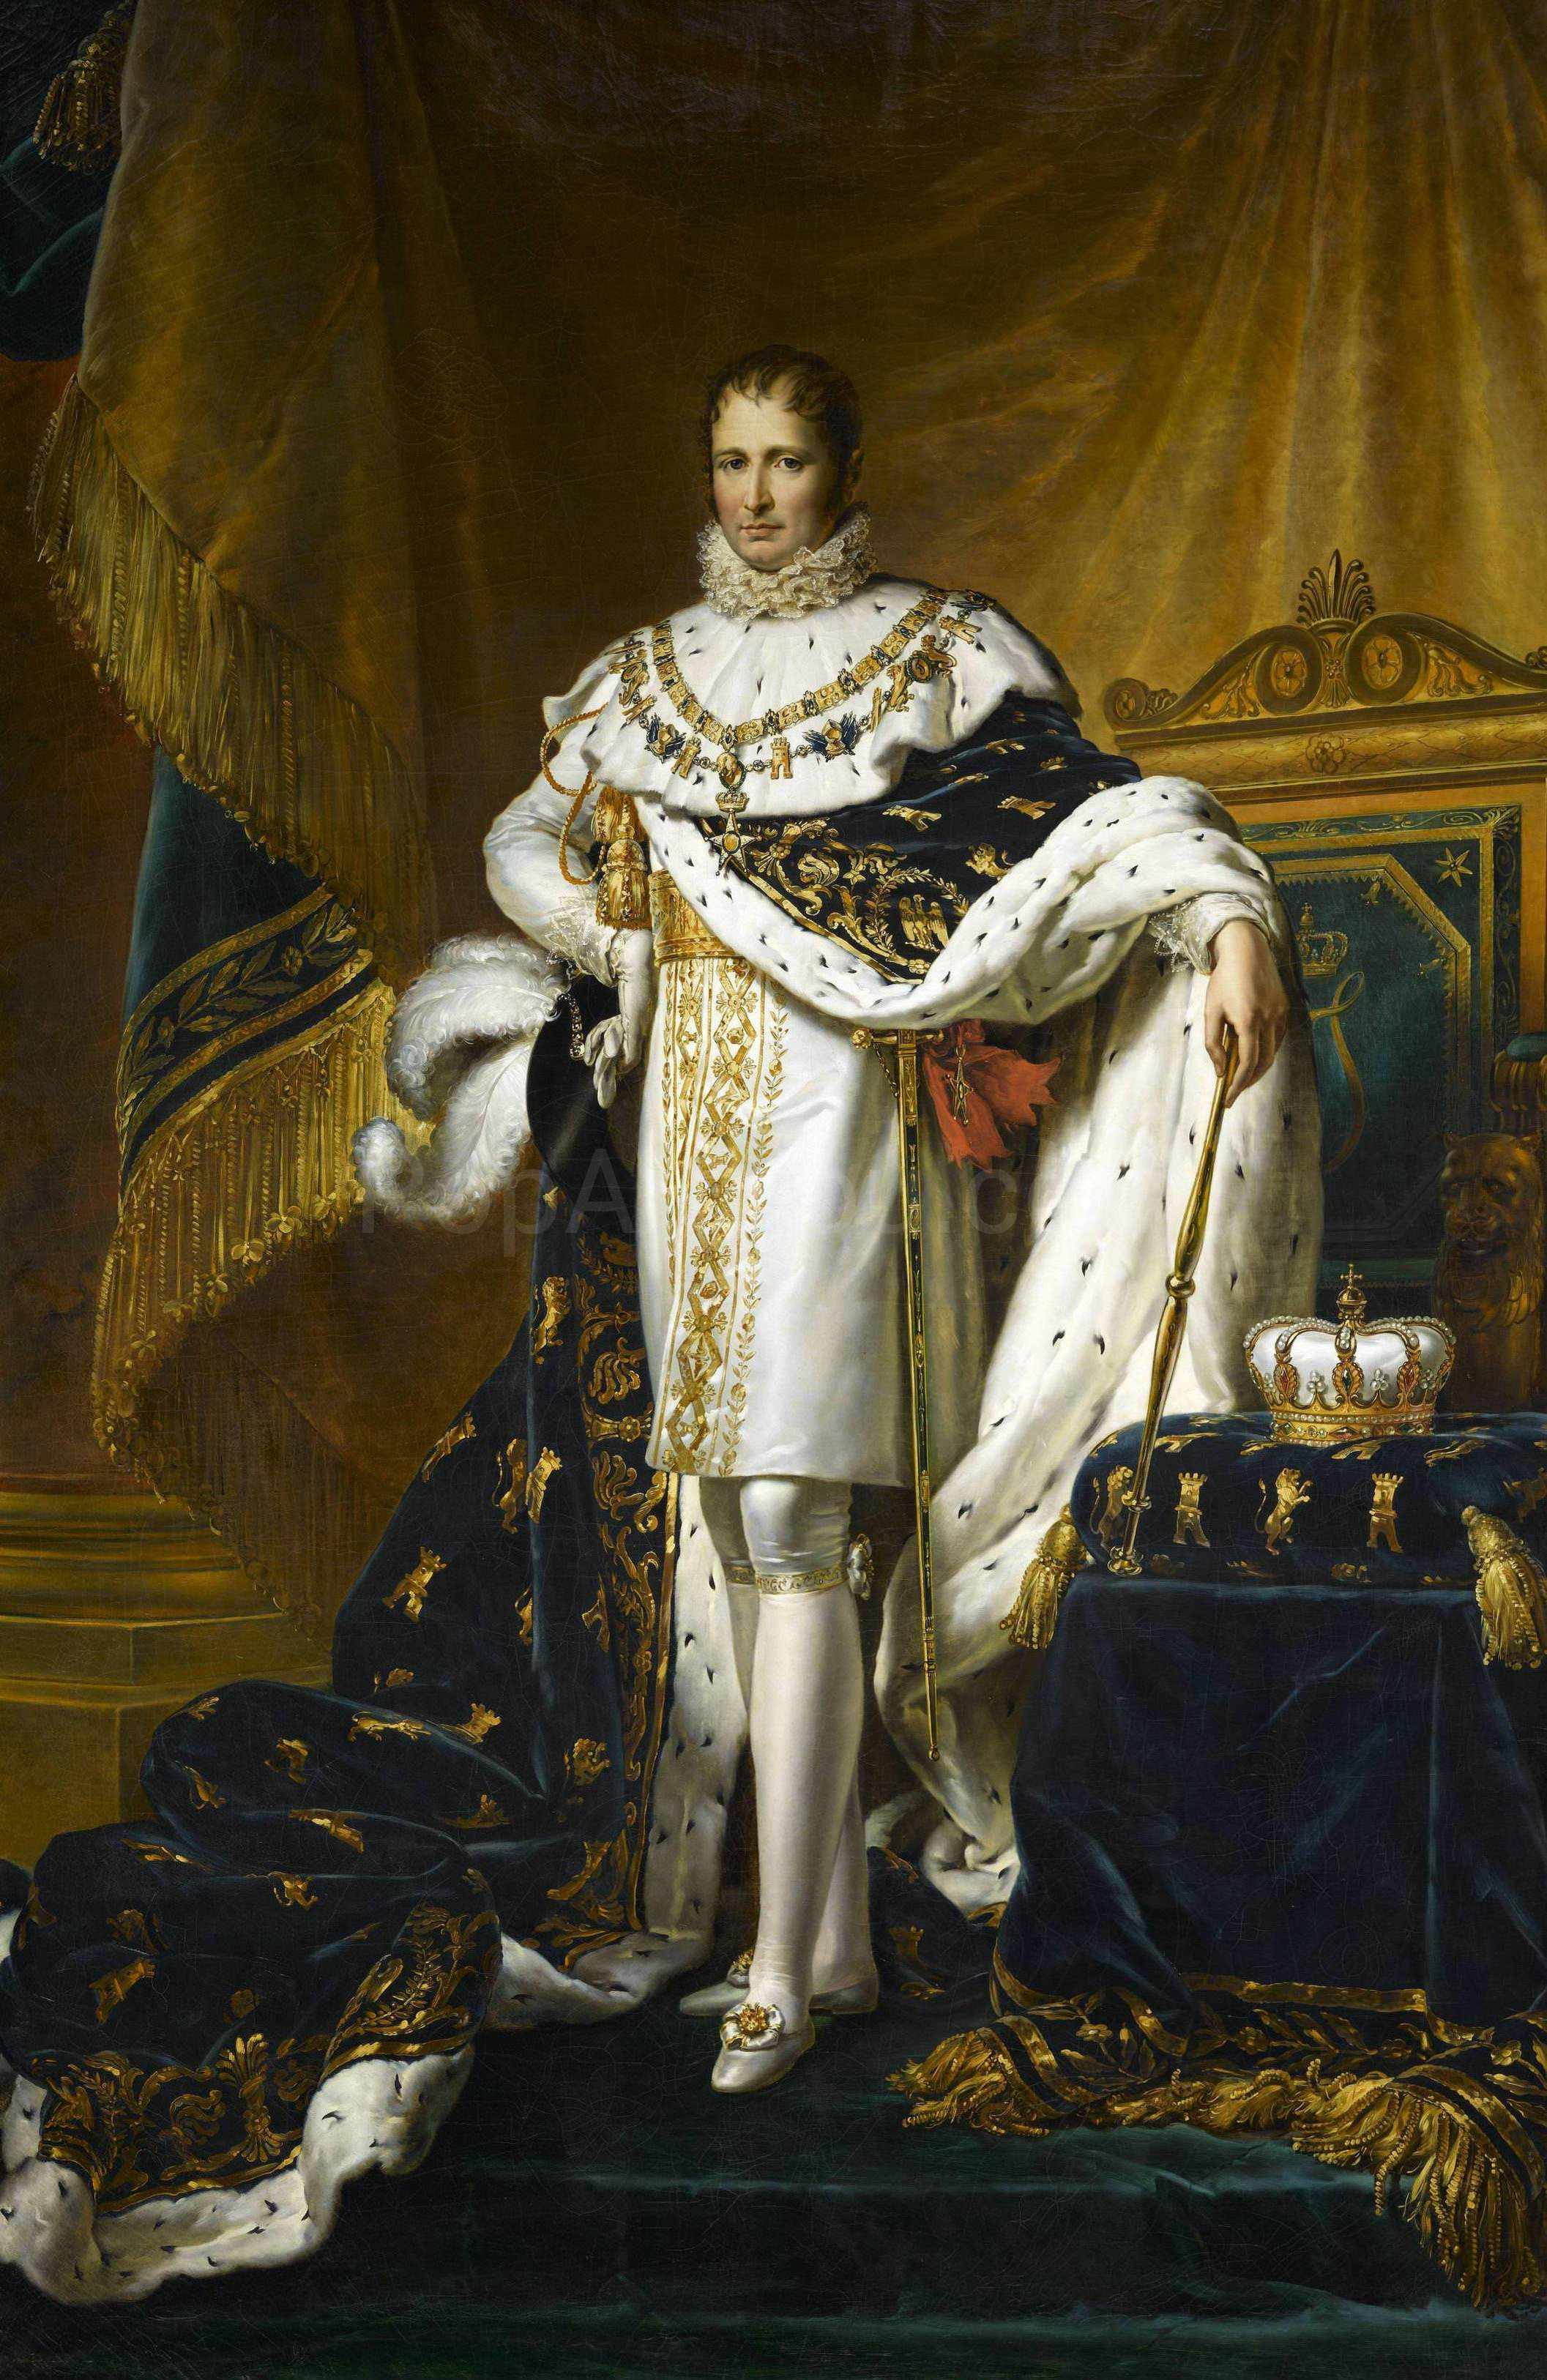 The portrait shows a man standing near the golden curtains dressed in renaissance regal attire